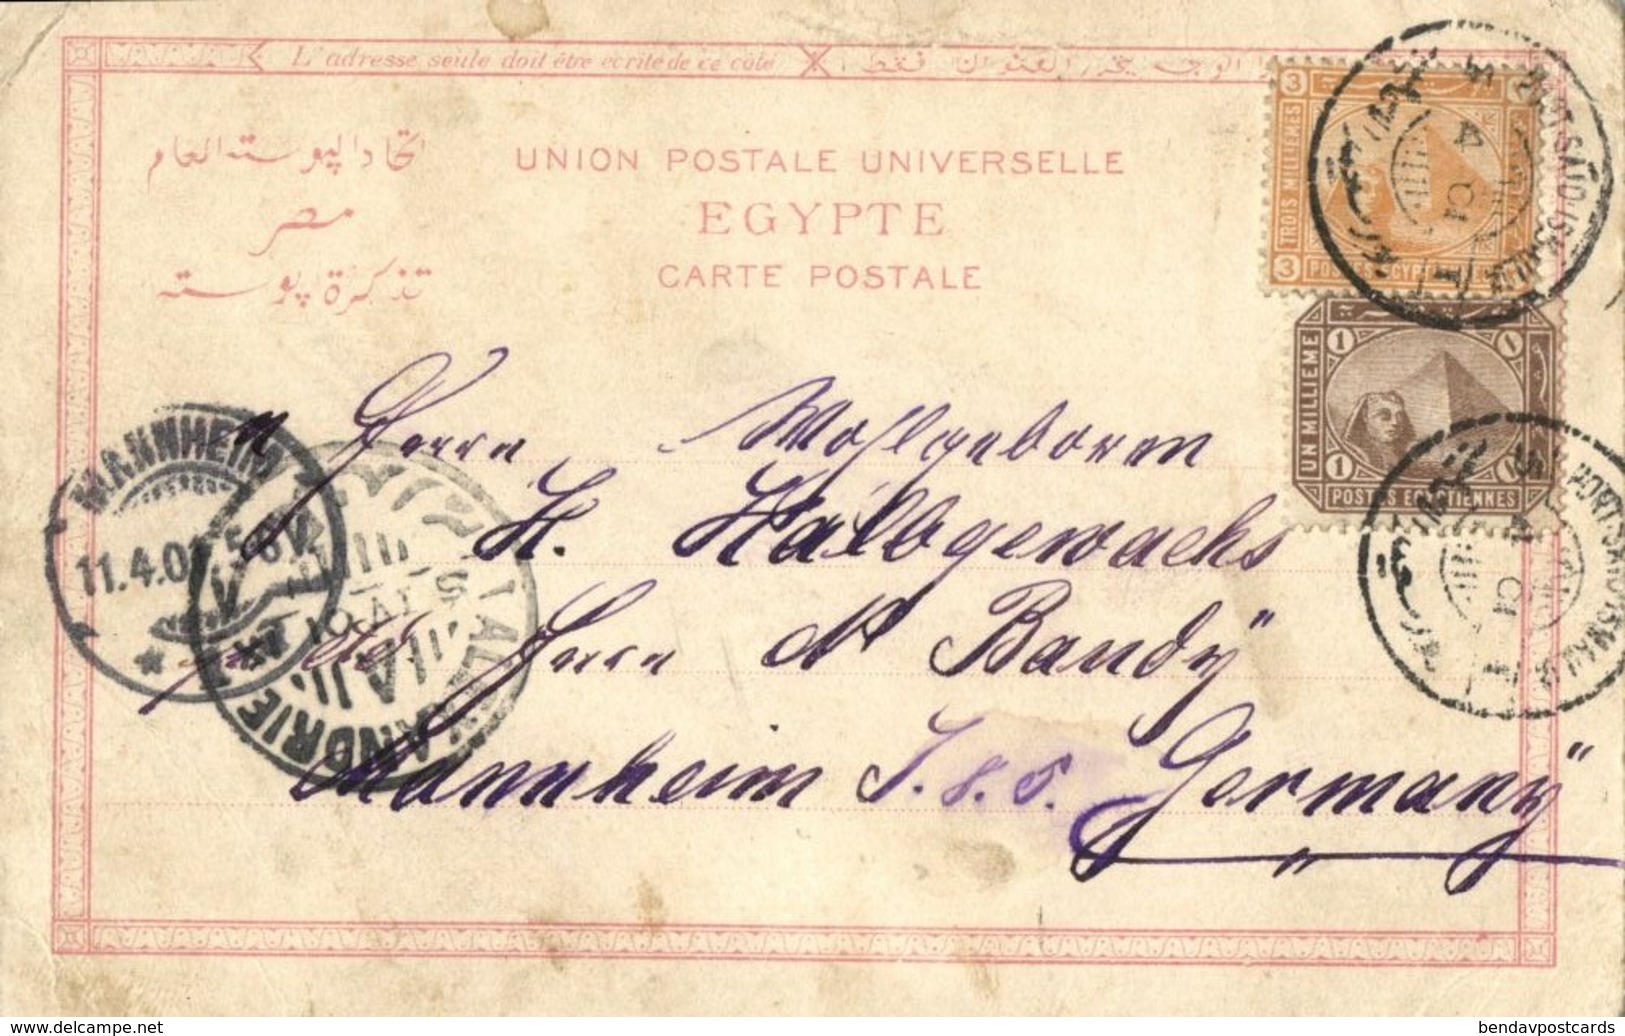 Egypt, CAIRE CAIRO, River Nile, Arab School Mosque Islam (1901) Litho Postcard - Le Caire